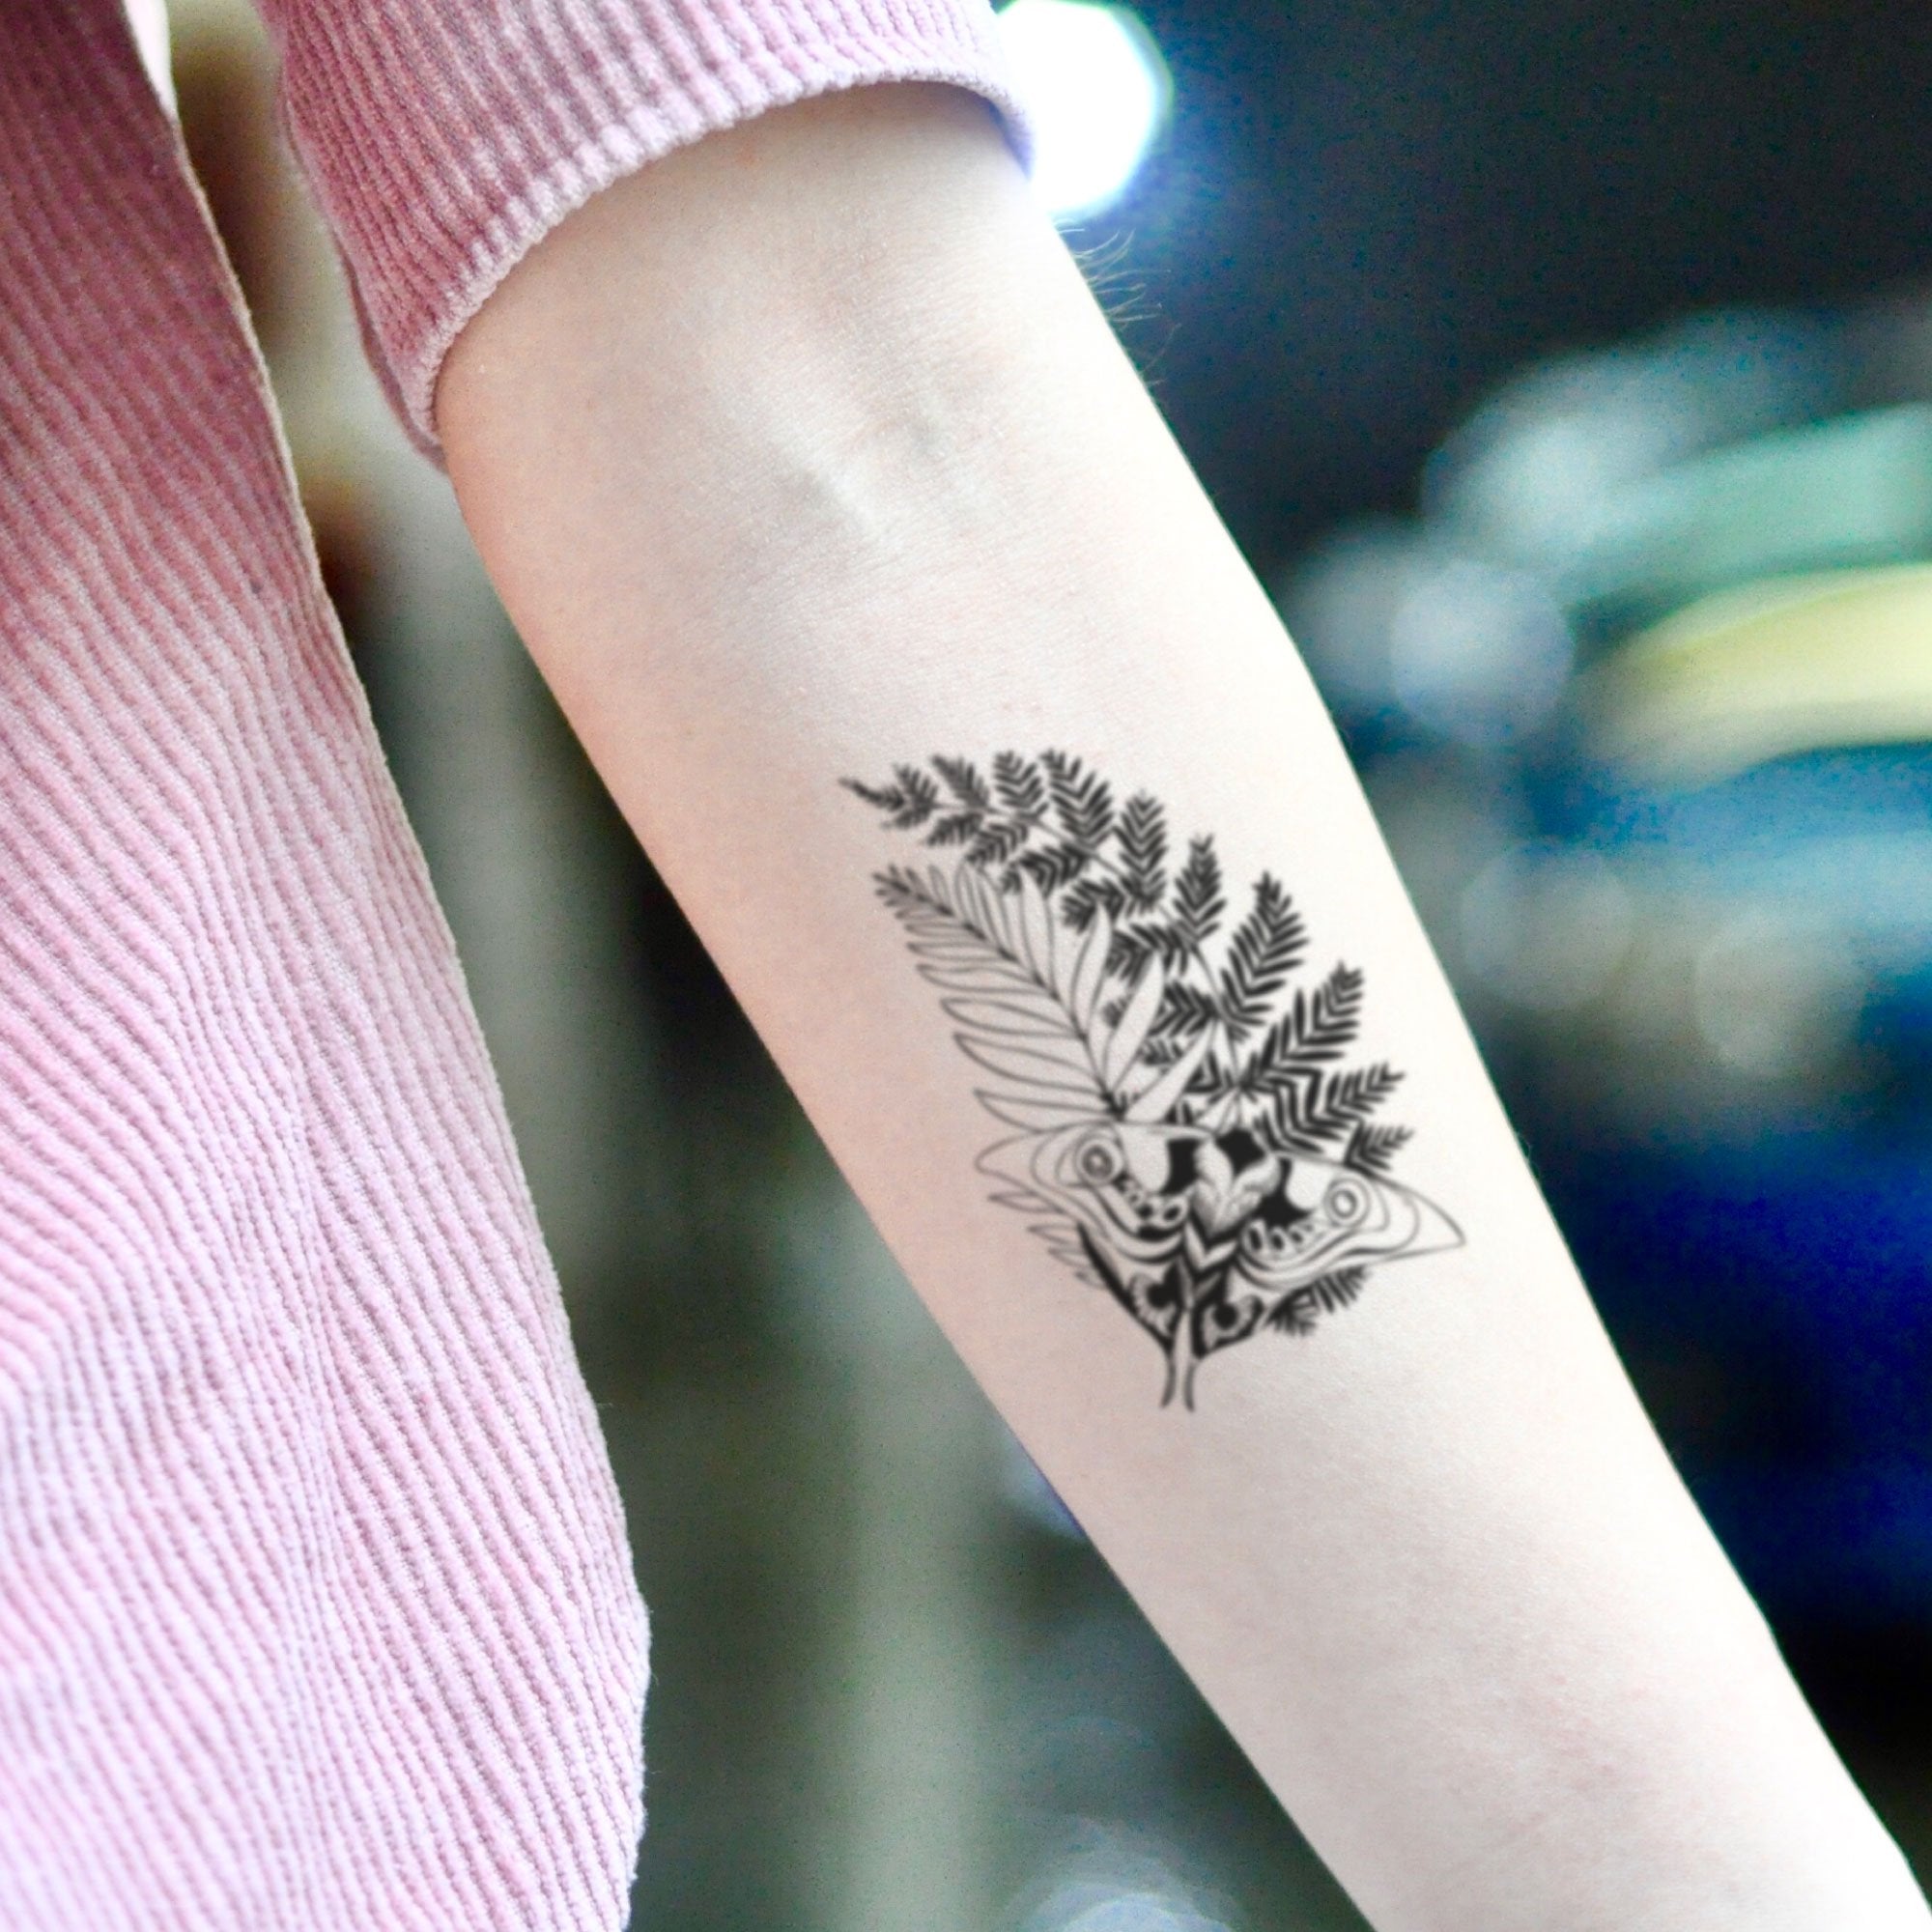 The Last Of Us Tattoo Drawing, The Last Of Us 2- Ellie's Tattoo